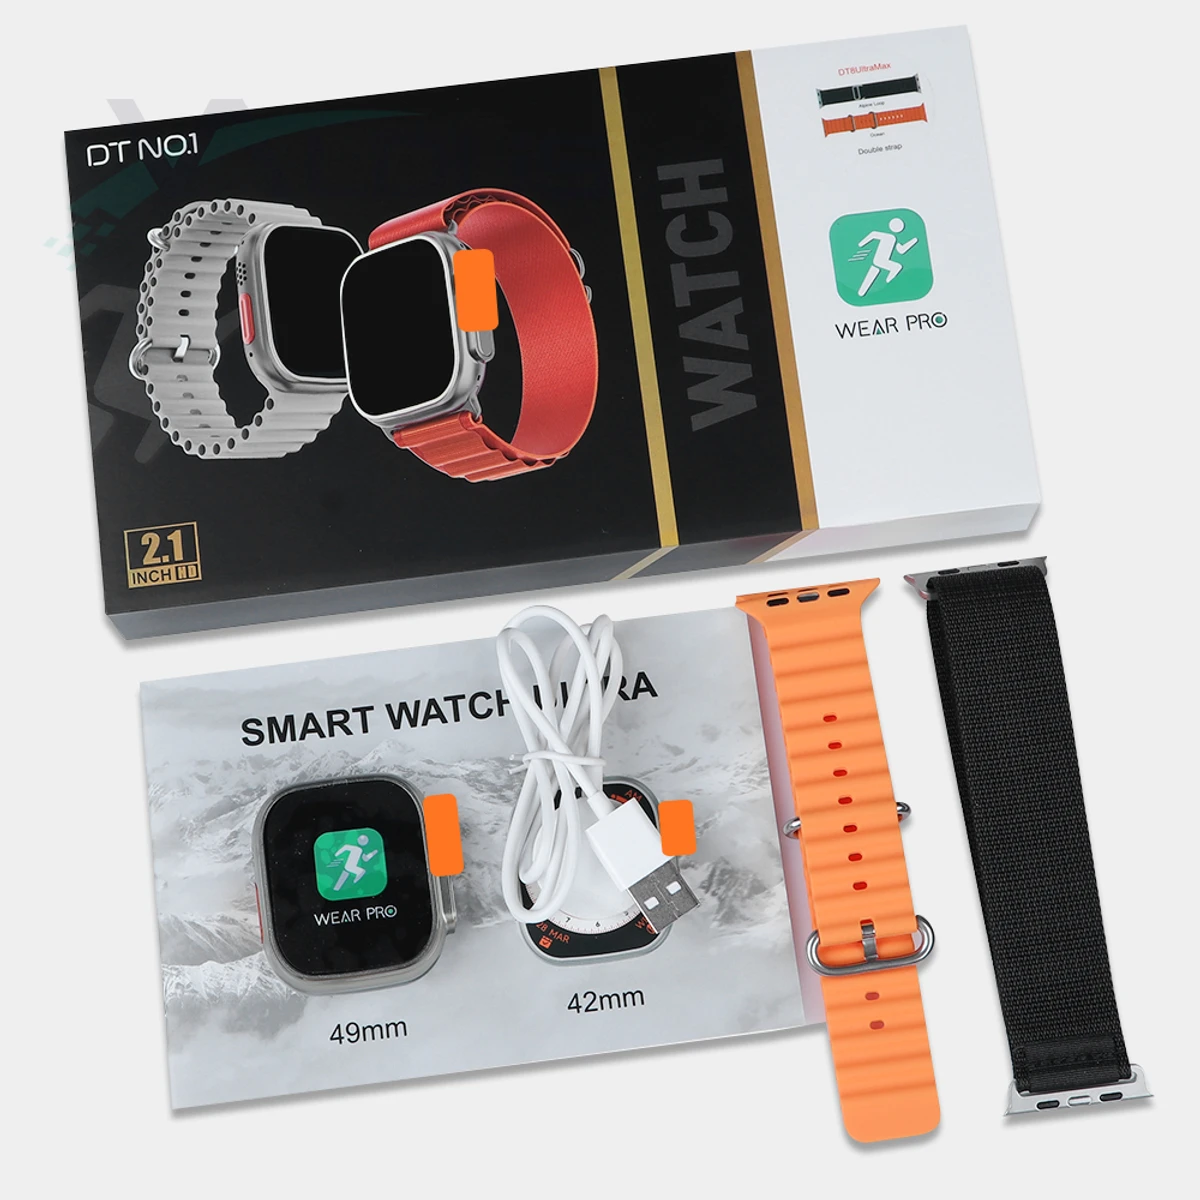 DT NO.1 – DT8 Ultra Plus Smart Watch